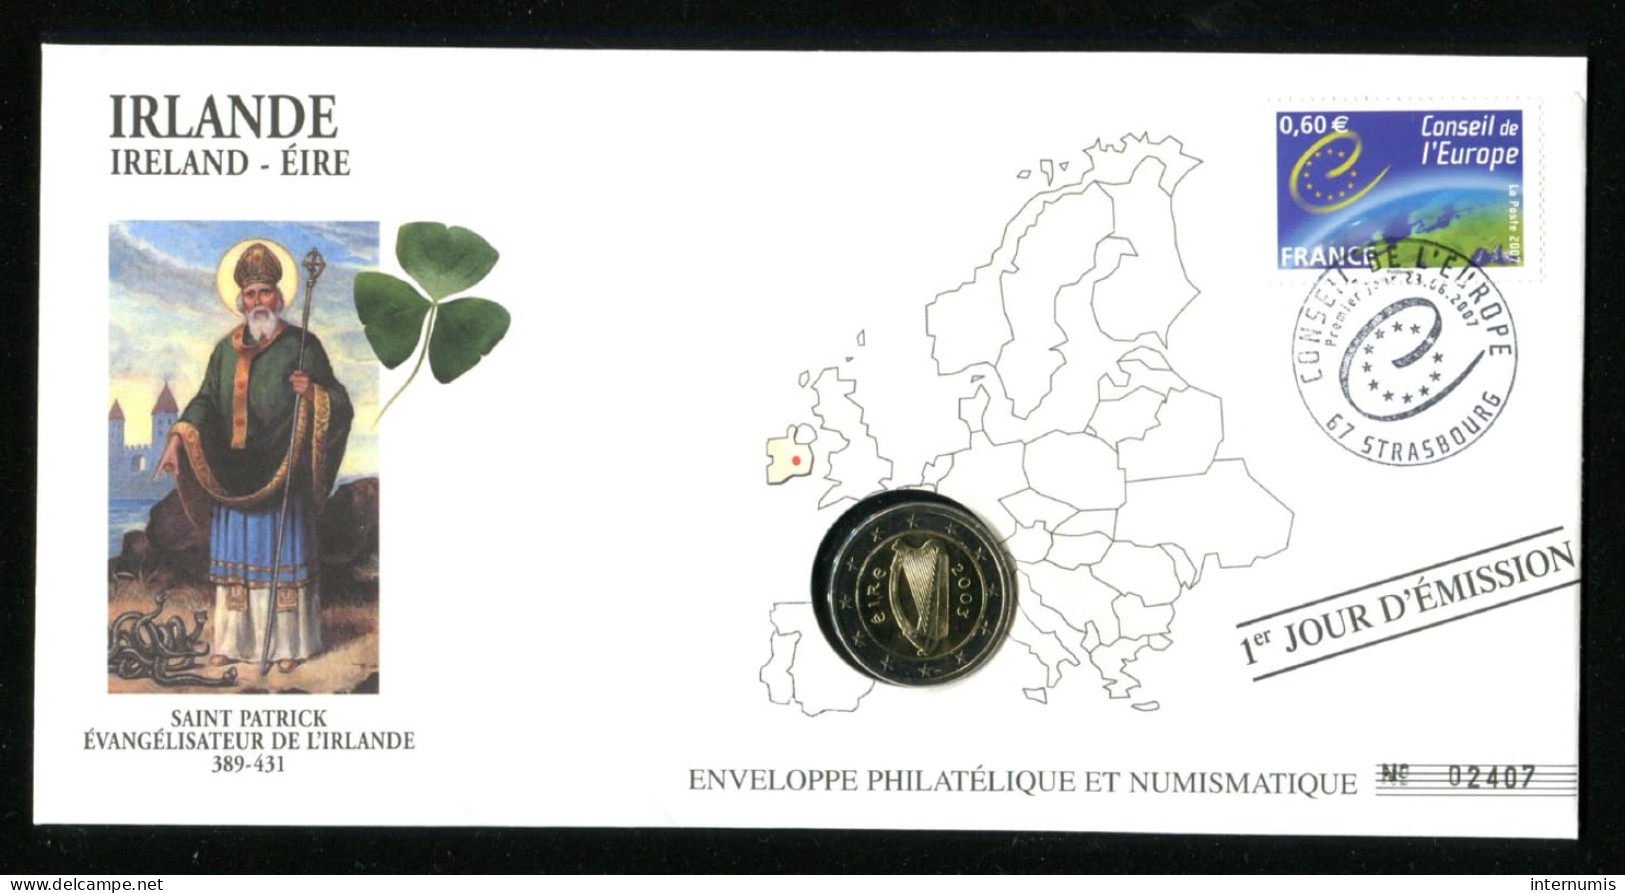 Irlande / Ireland, 2 Euro, 2003, 1er Jour D'Emission (23-06-2007) - Enveloppe Philatélique Et Numismatique - Ireland